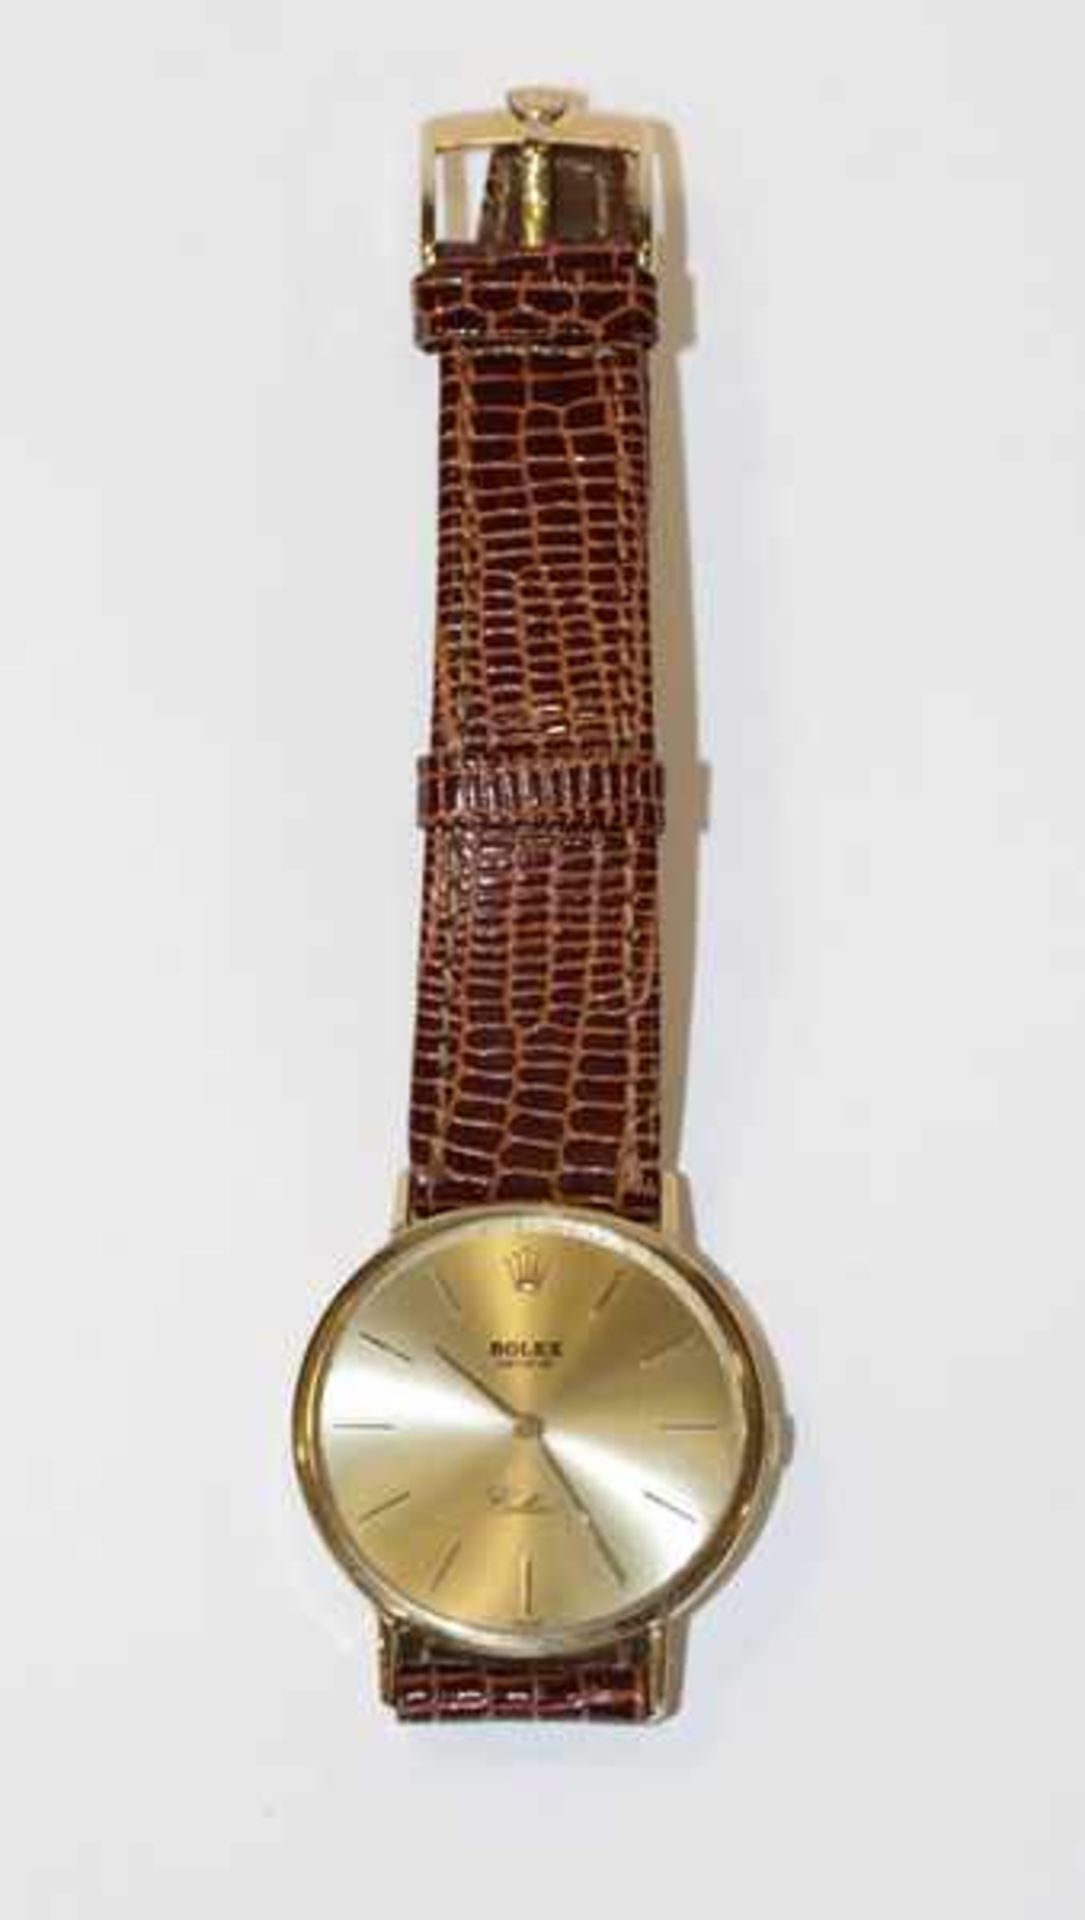 Rolex Cellini Armbanduhr, 18 k Gelbgold, gelbes Zifferblatt, Handaufzug, intakt, D 3,1 cm, an